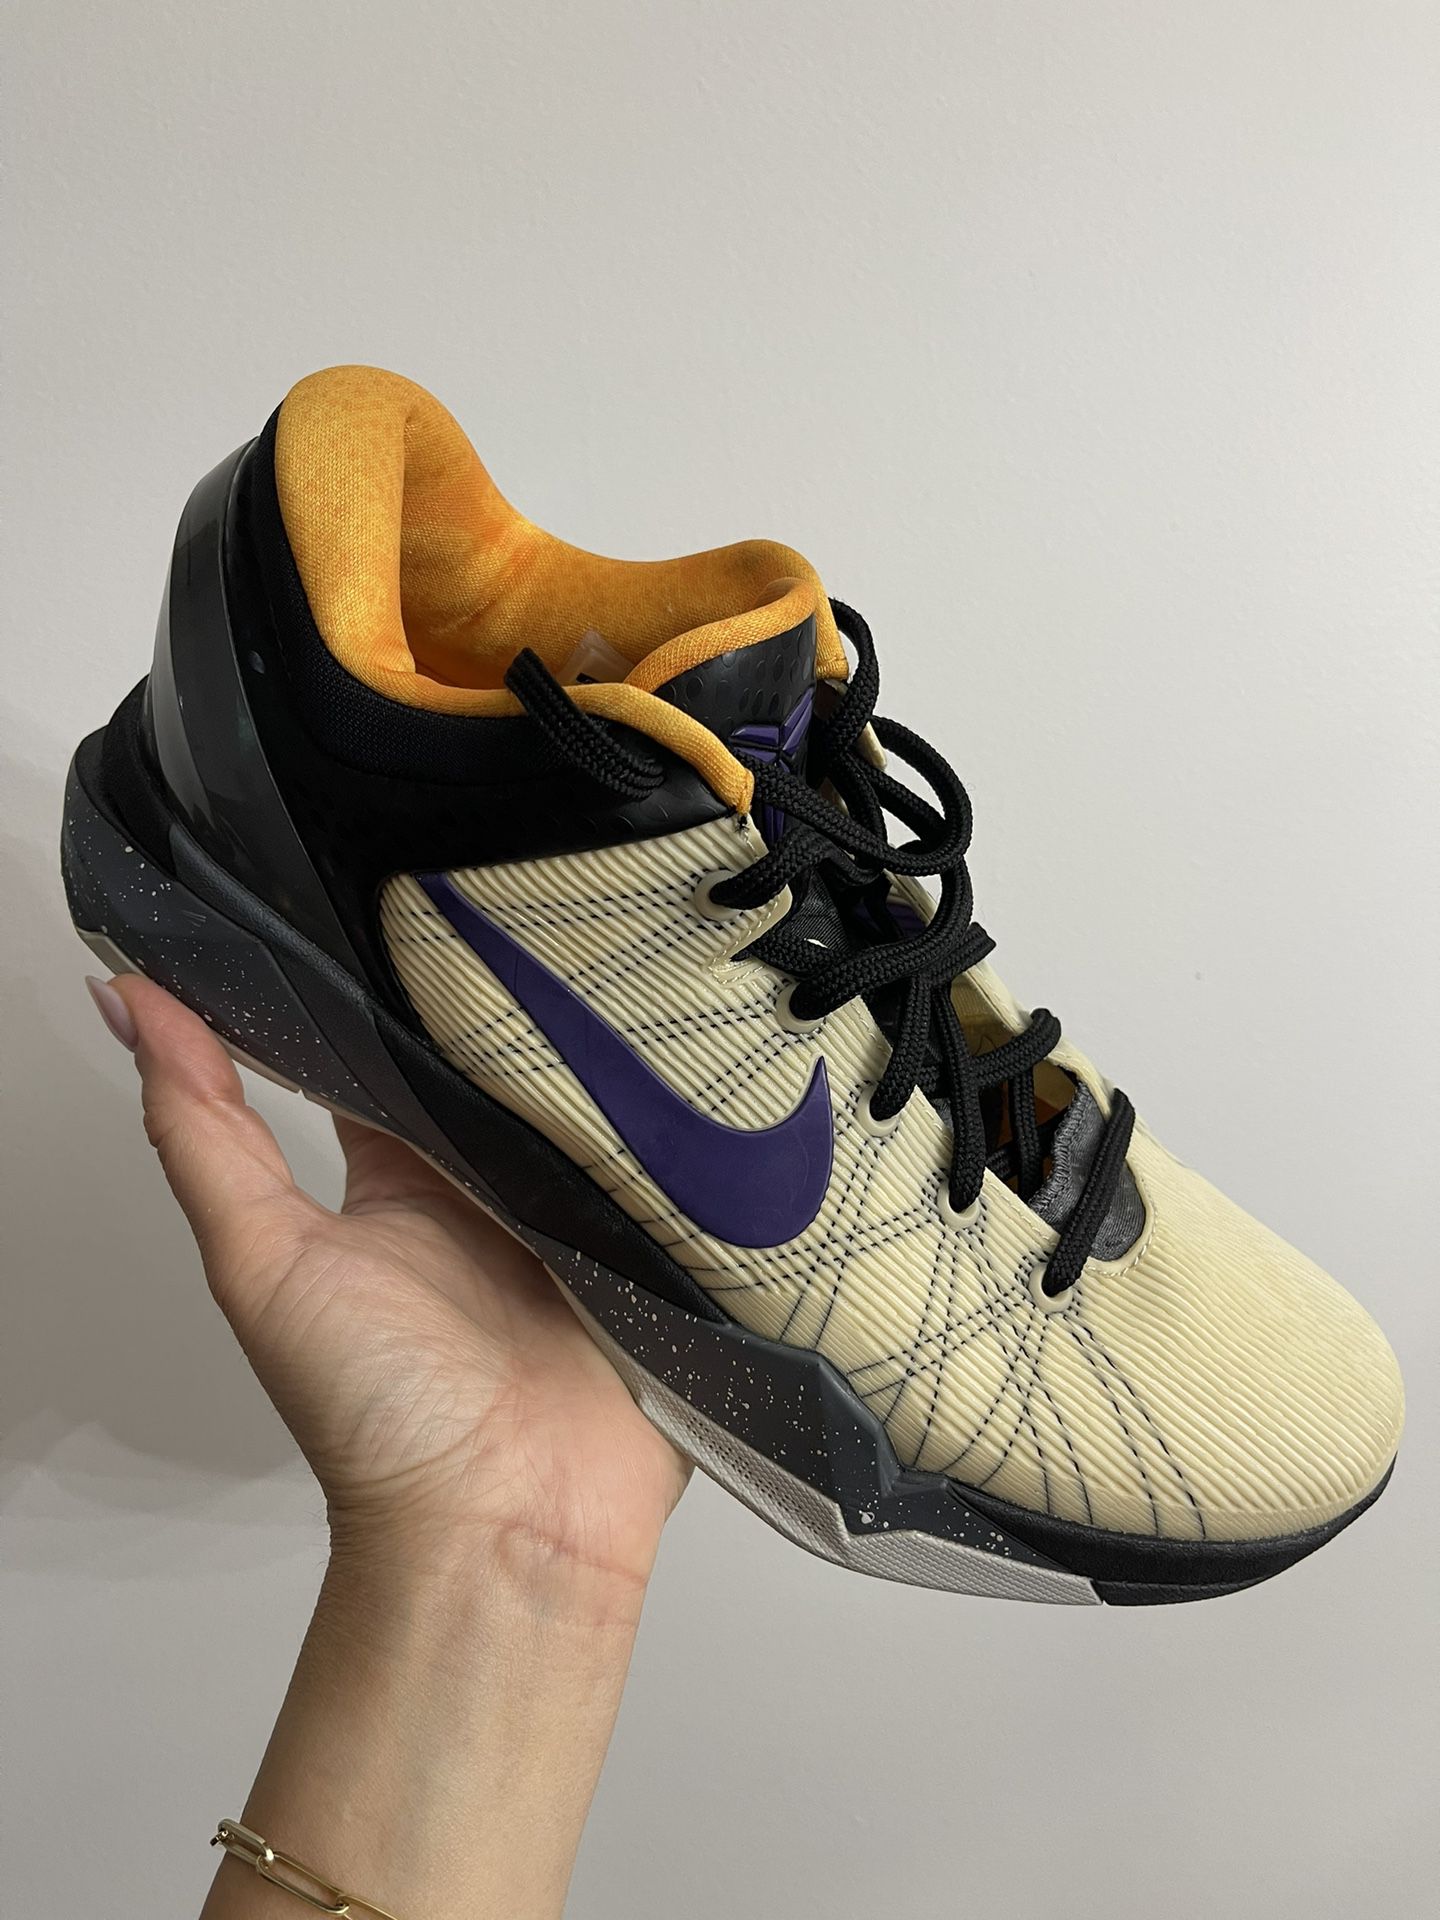 Nike Zoom Kobe VII 'Court Purple/University Gold' - Release